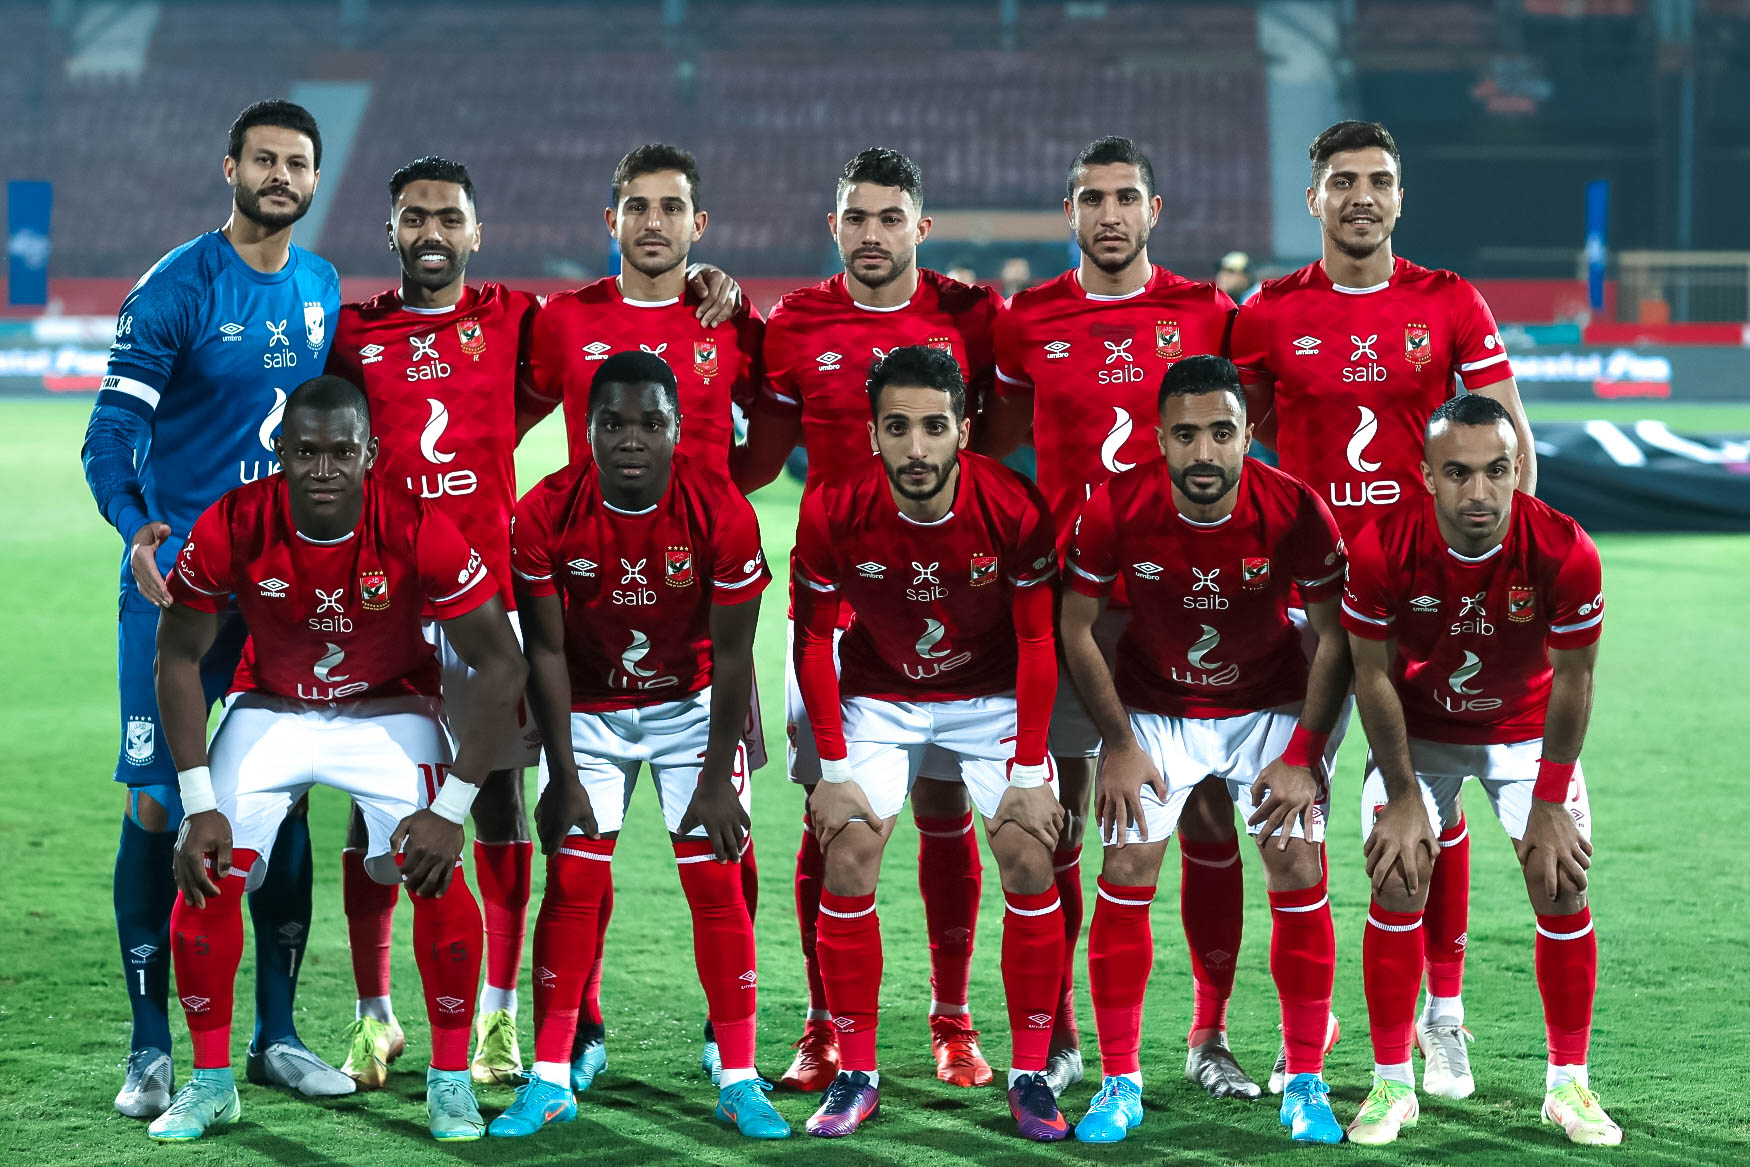 Match Preview: Pharco vs Al Ahly